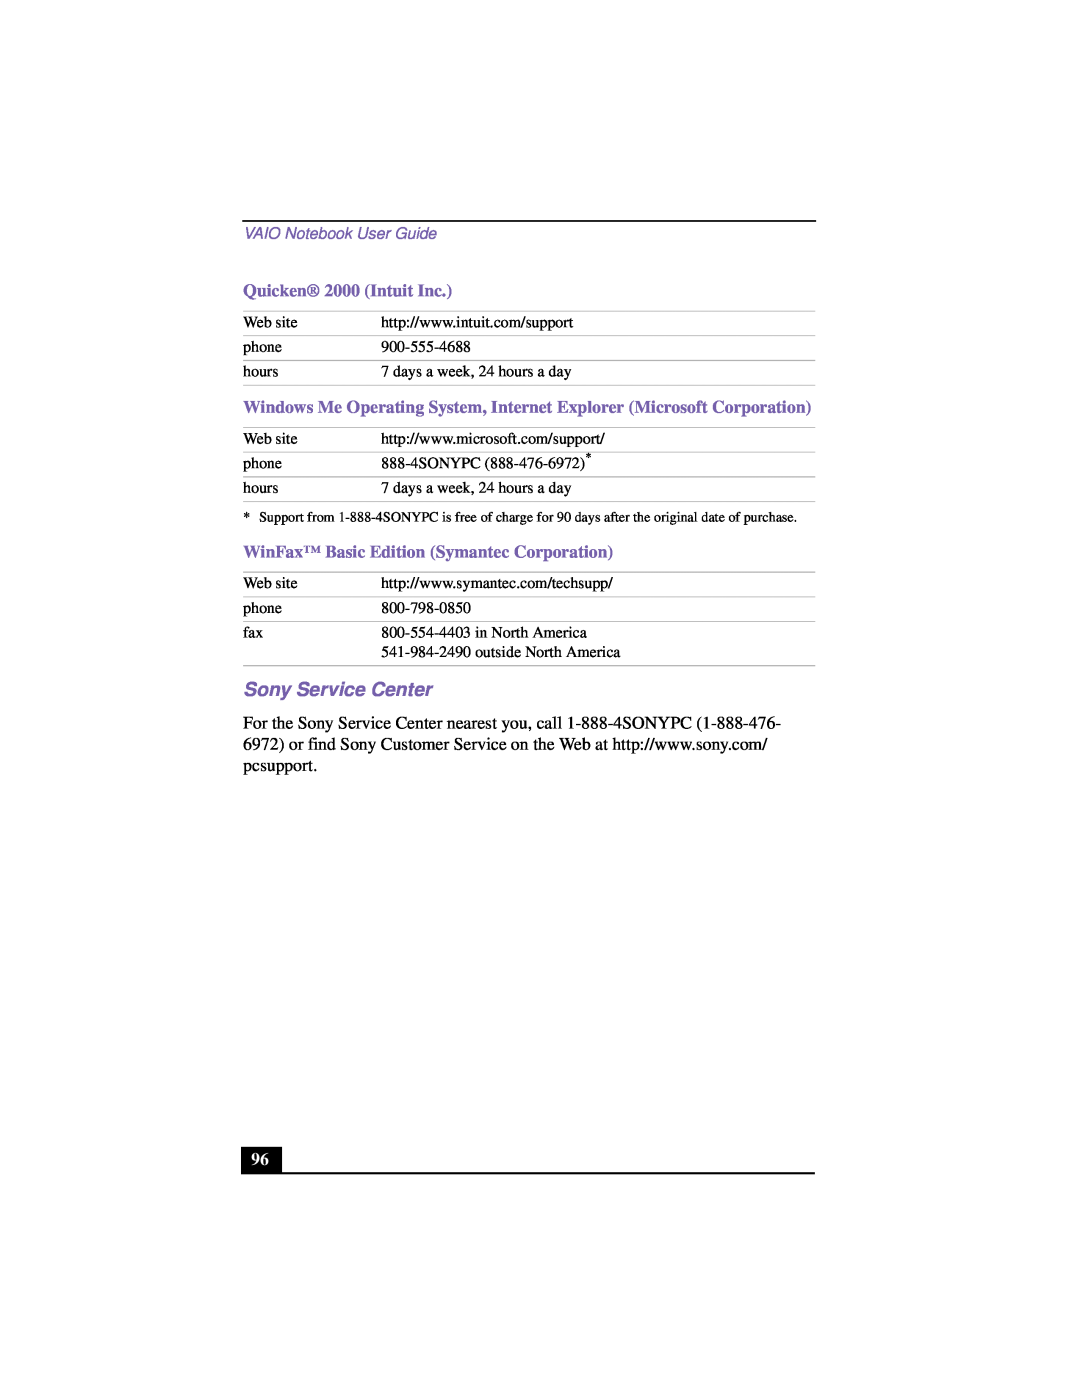 Sony PCG-F640 manual Sony Service Center, Quicken 2000 Intuit Inc, WinFax Basic Edition Symantec Corporation 